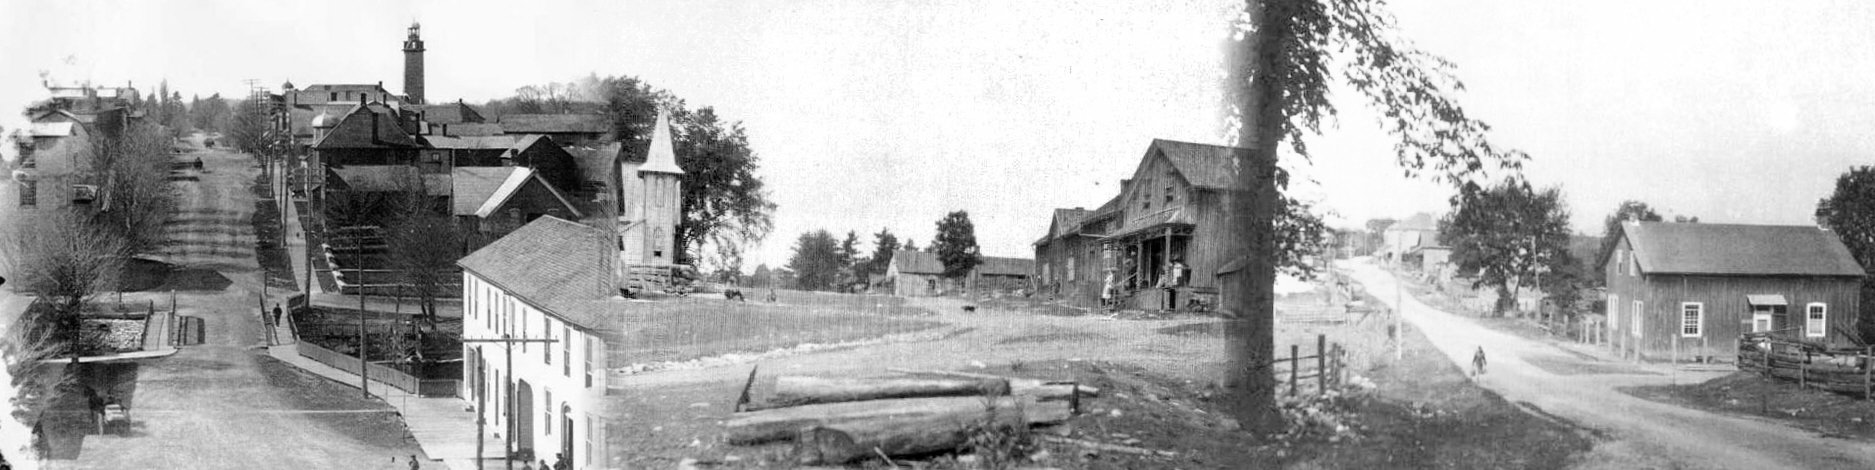 Hoods Corners, Watsons Corners, McDonald Corners, Lanark County Ontario circa 1900